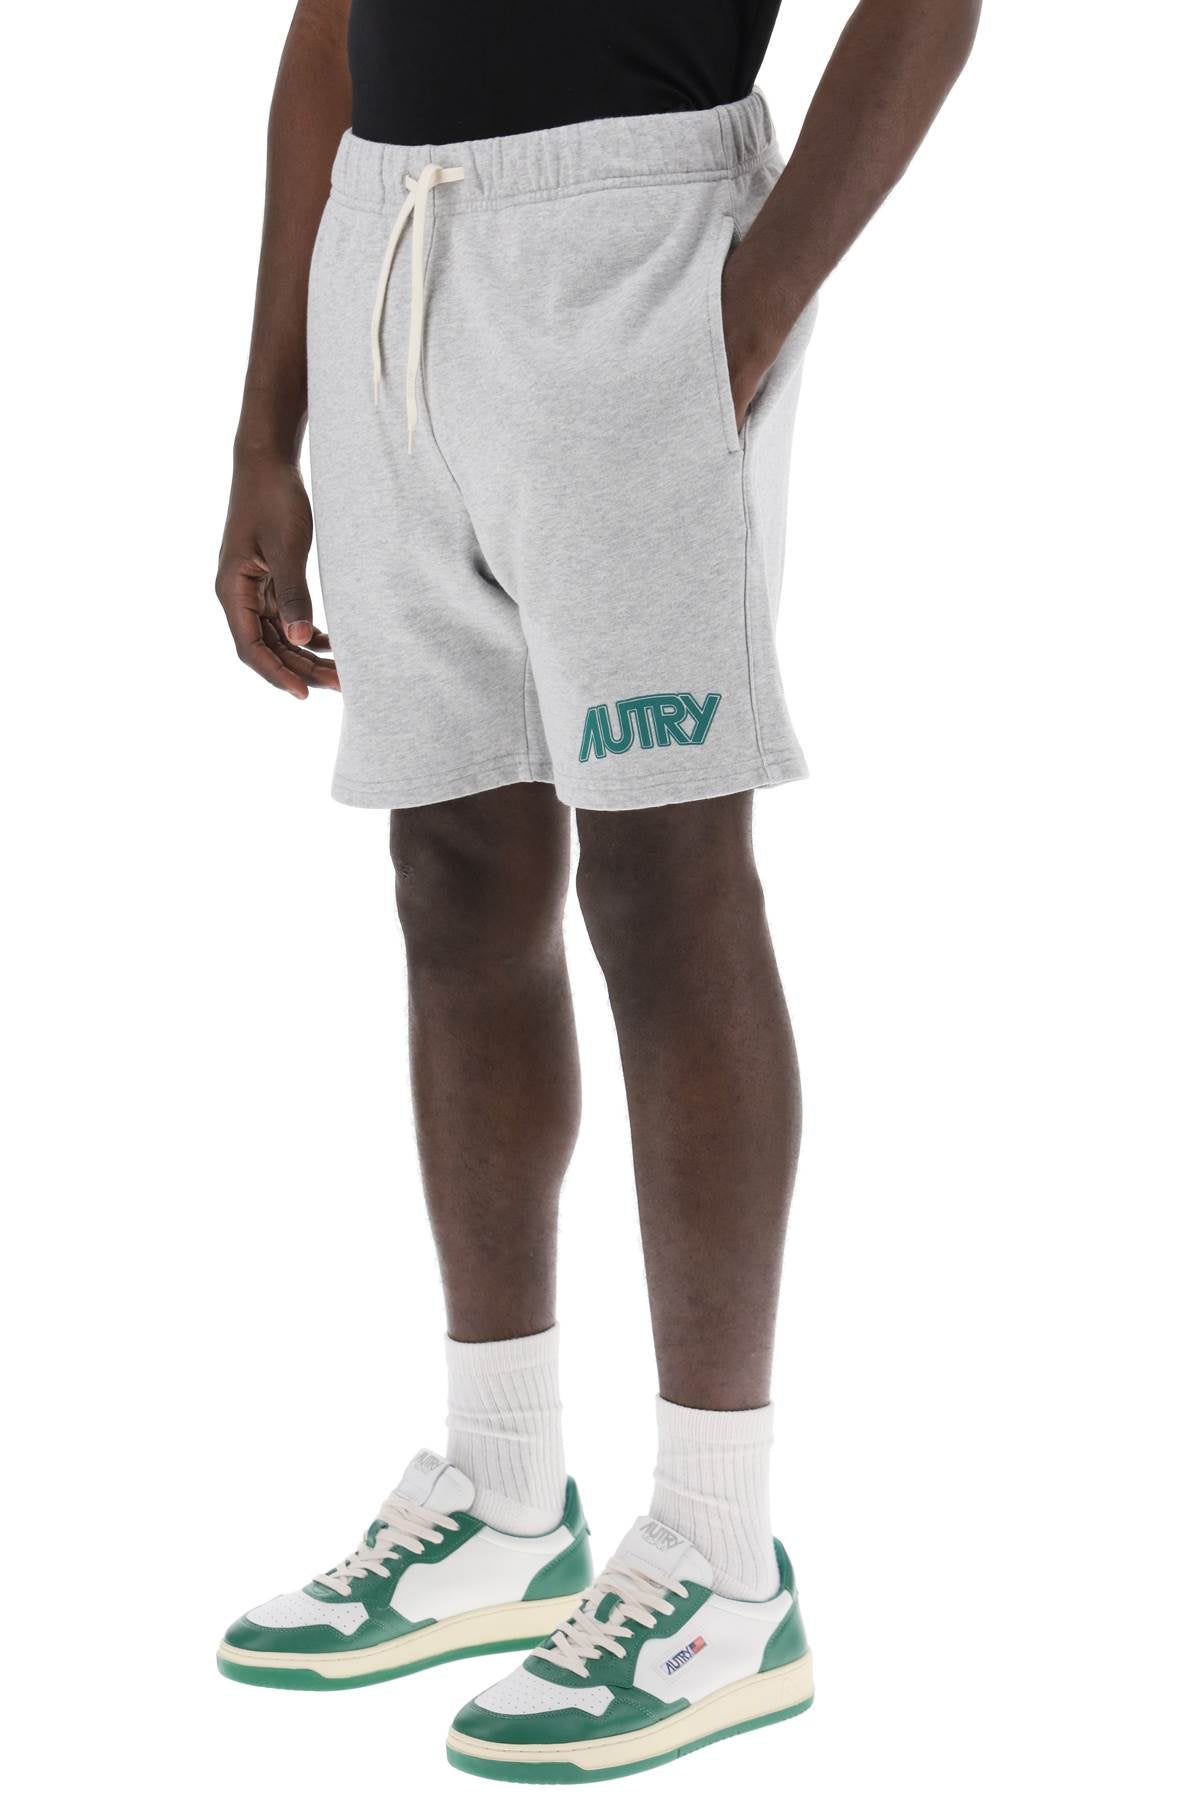 Autry sweatshorts with logo print-3